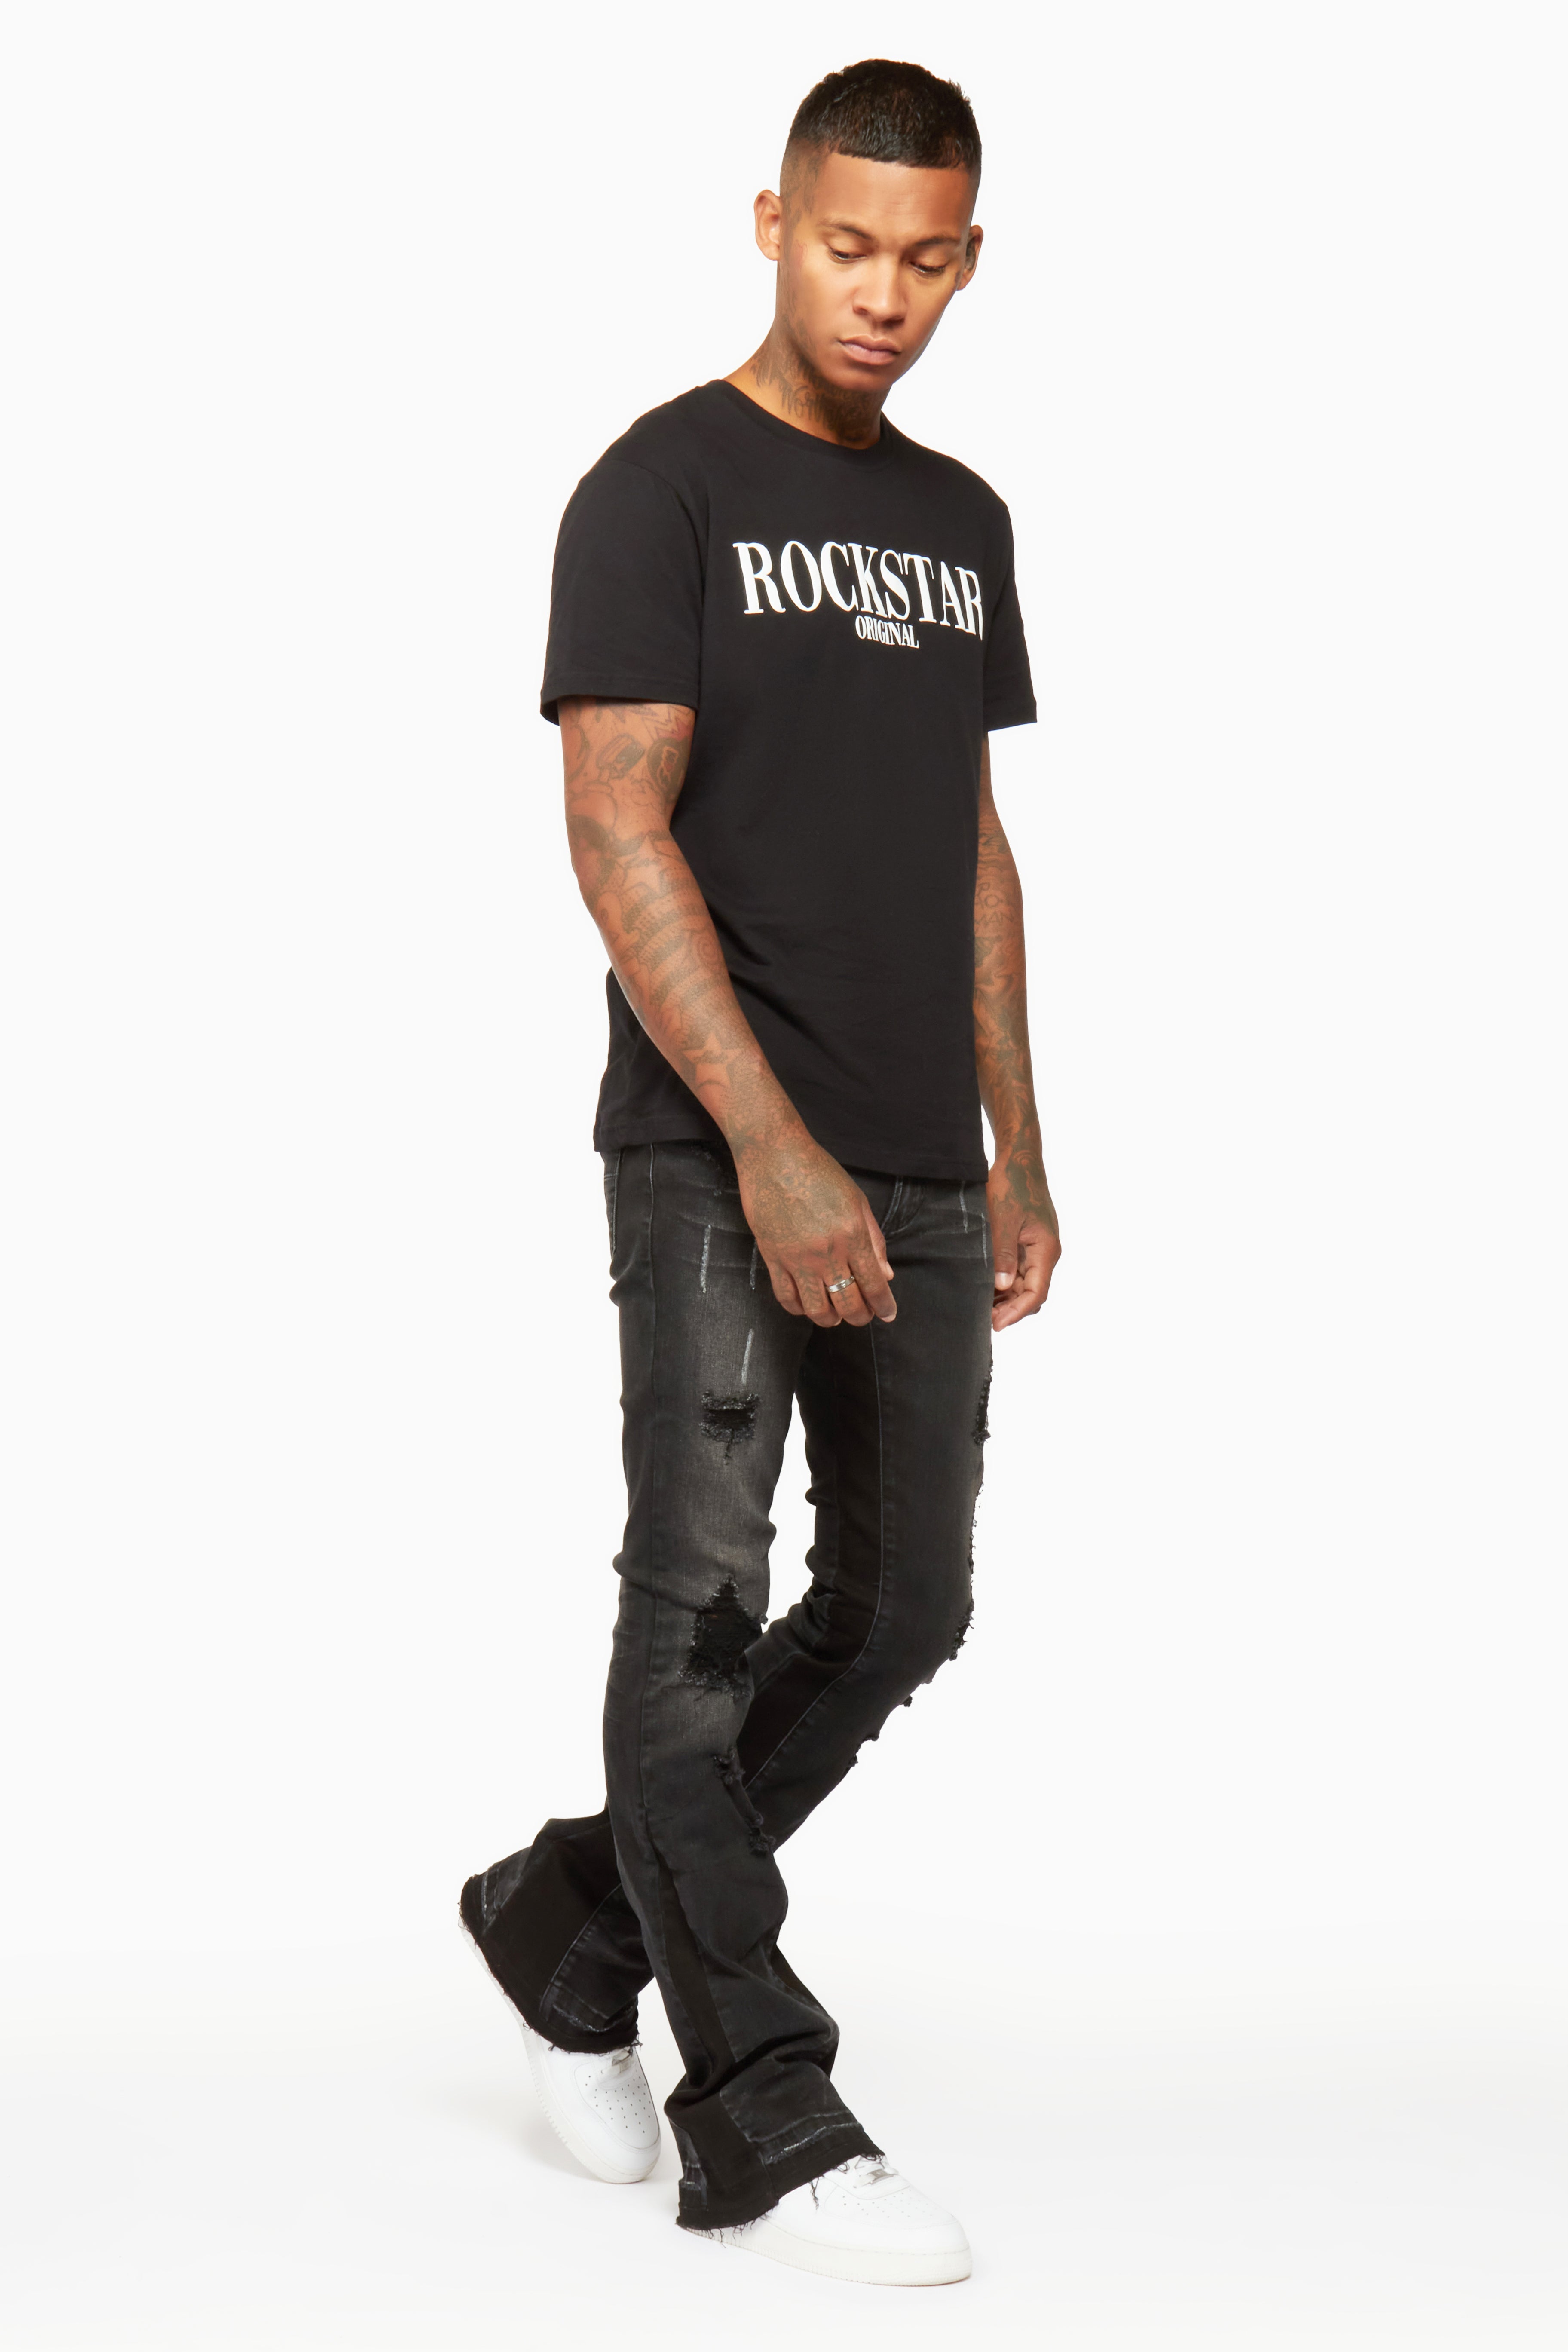 Tibbs Black Stacked Flare Jean– Rockstar Original